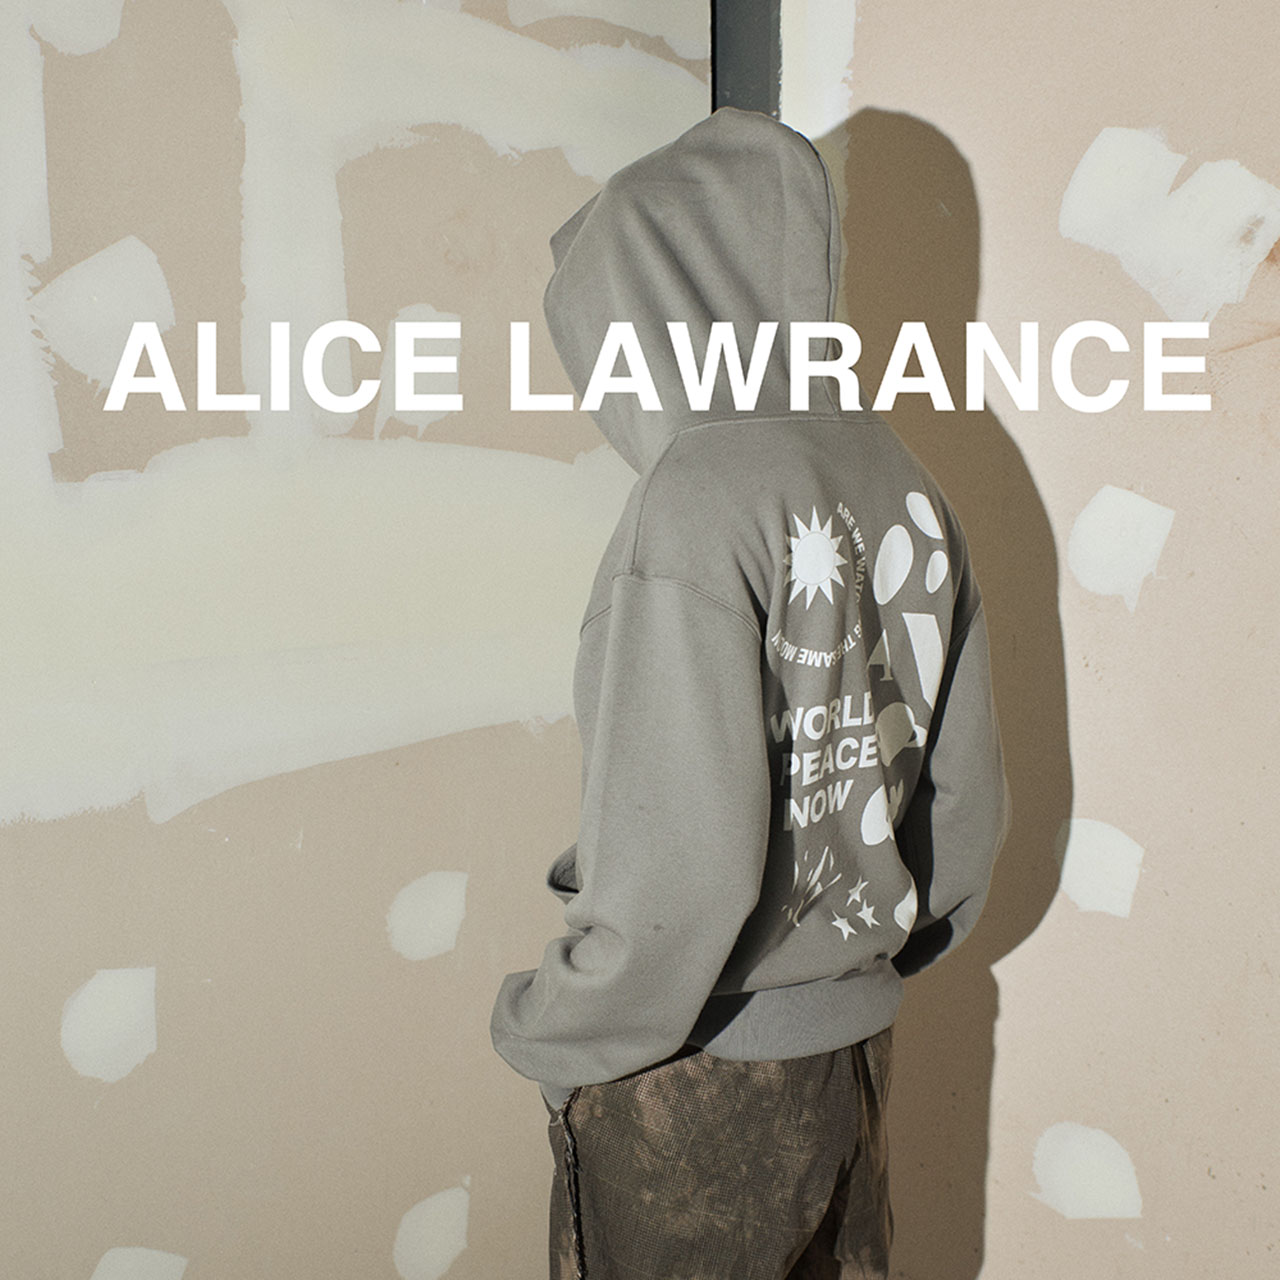 ALICE LAWRANCE,服裝,韓國服裝,服裝品牌,韓國品牌,韓國服裝品牌